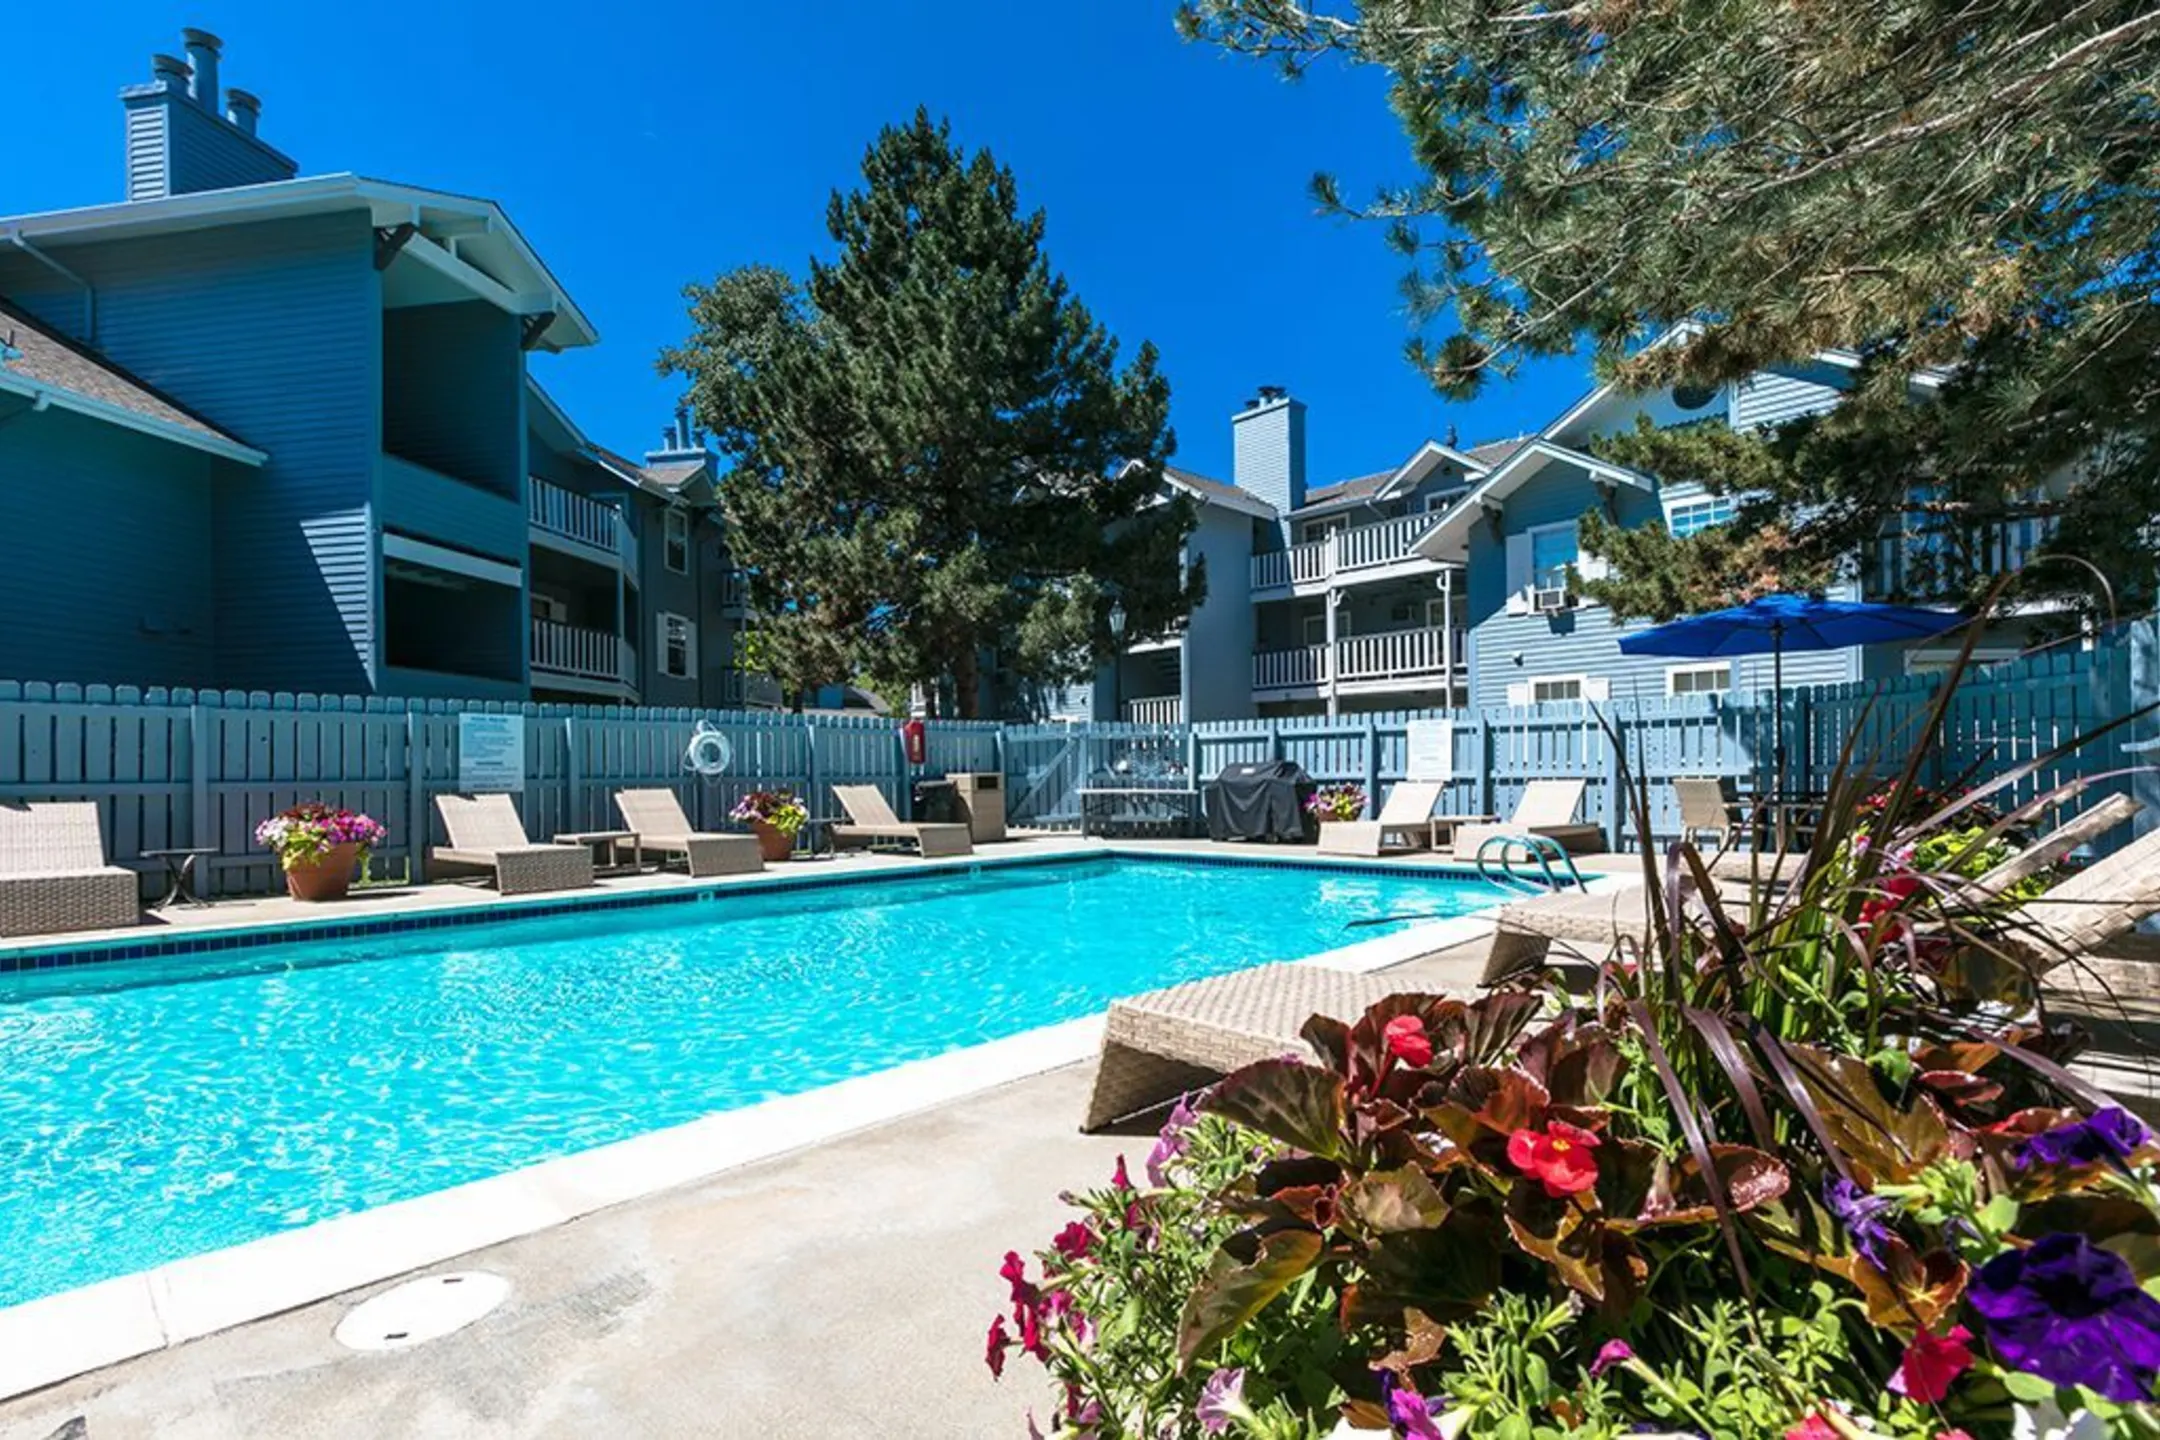 Pool - Victoria Inn Apartments - Longmont, CO